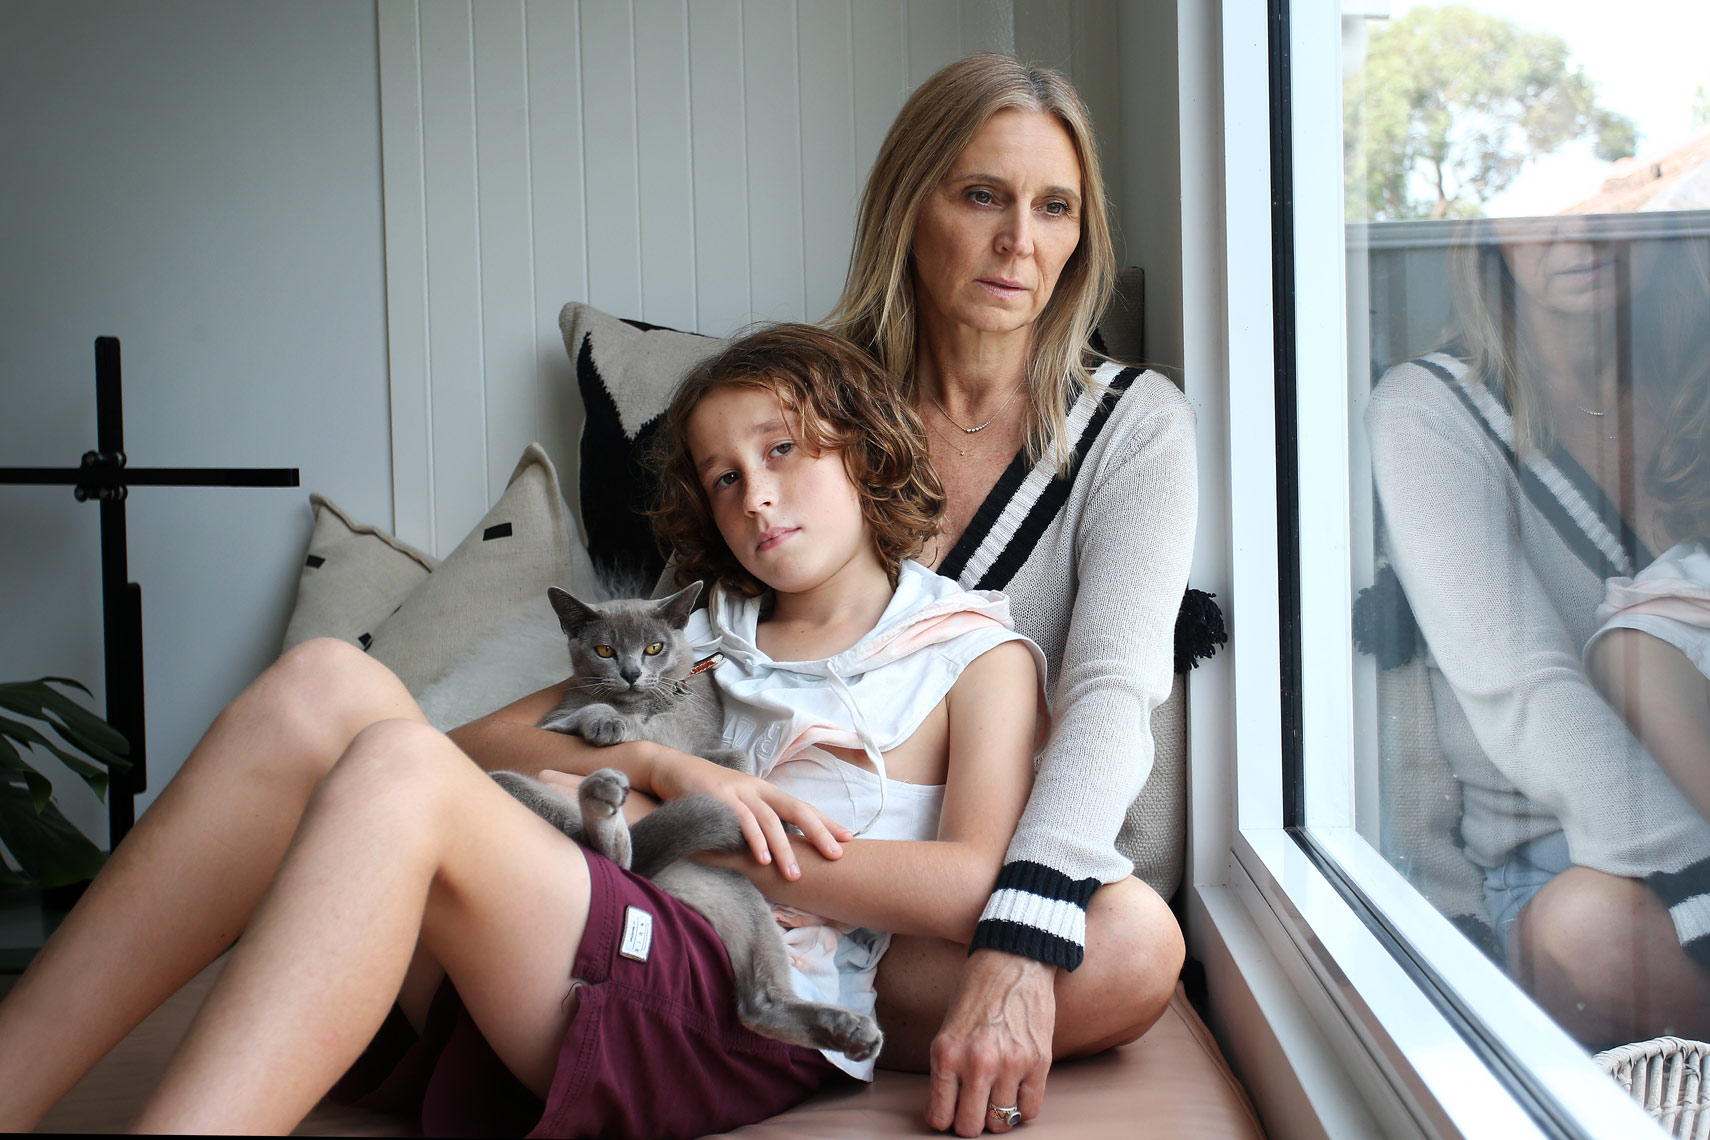 Portraits Of Isolation: Australians At Home During Coronavirus Pandemic